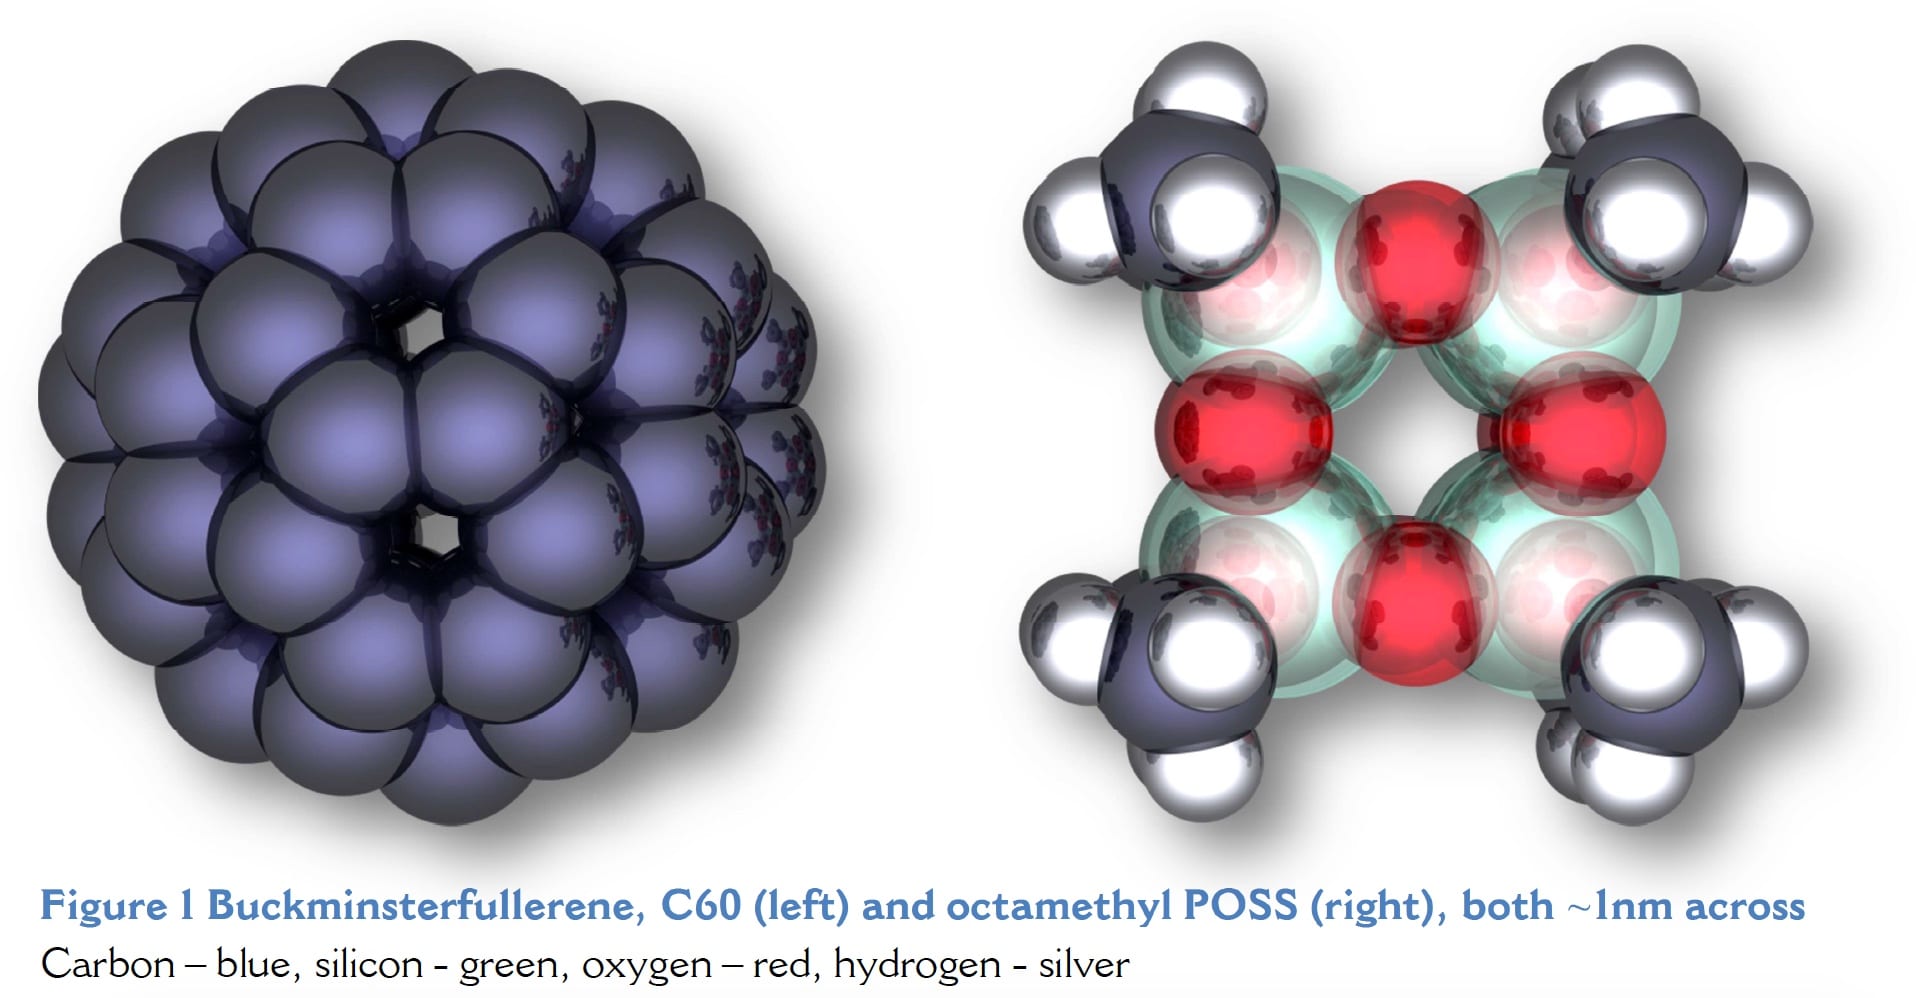 Polyhedral oligomeric silsesquioxanes size versus Buckminsterfullerene (C60)